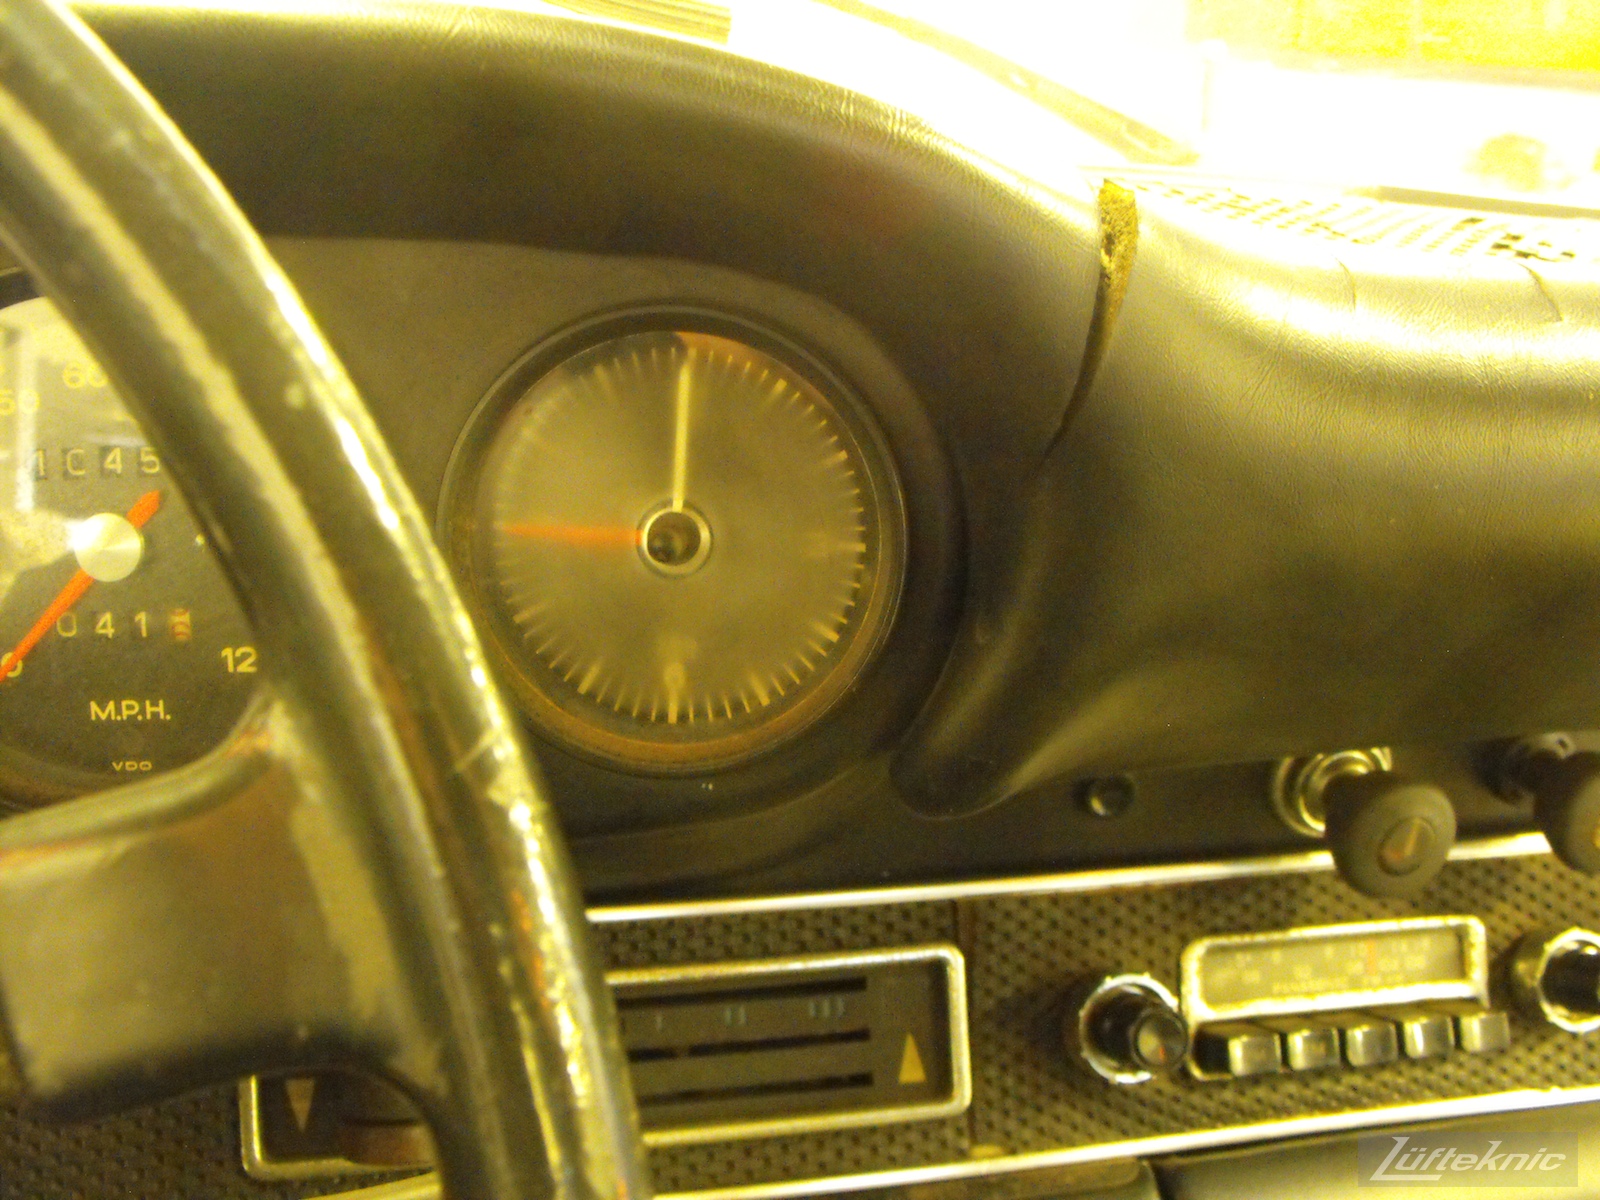 A close up of an aged clock and cracked dash of an Irish Green Porsche 912 undergoing restoration at Lufteknic.